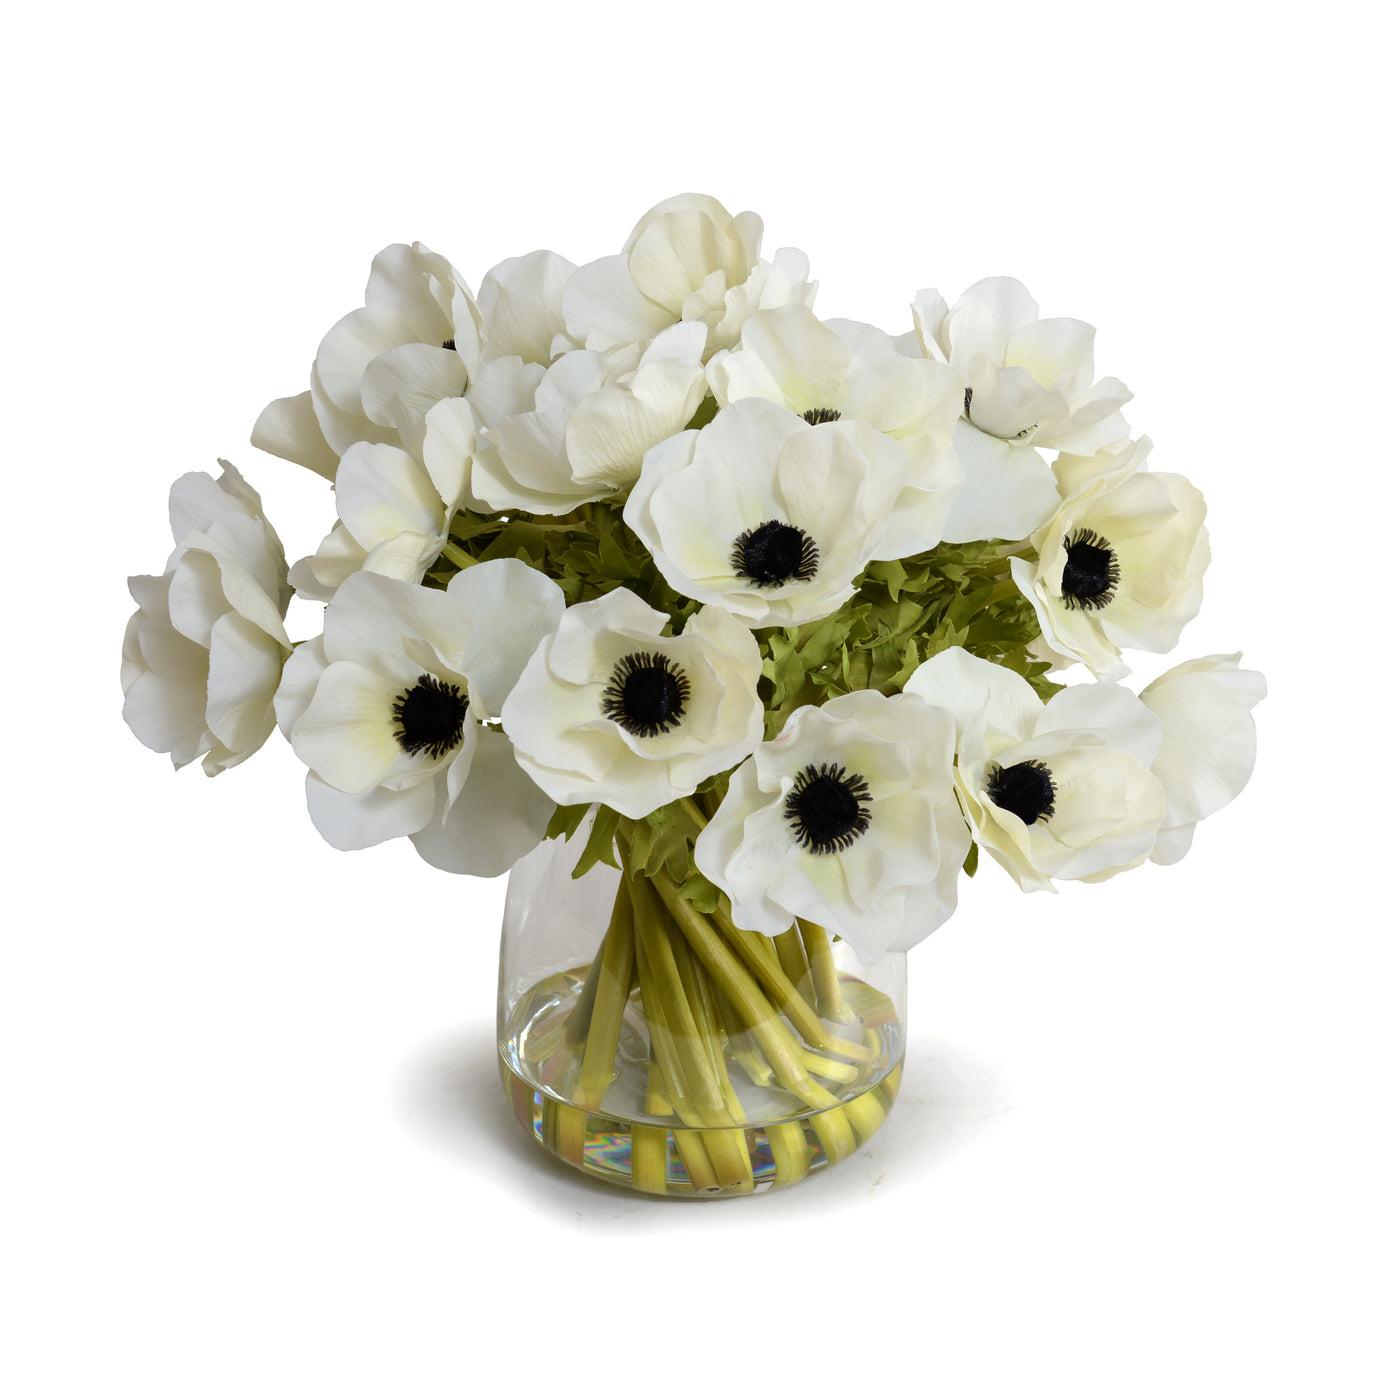 Anemone in tapered round vase, 12"H - White